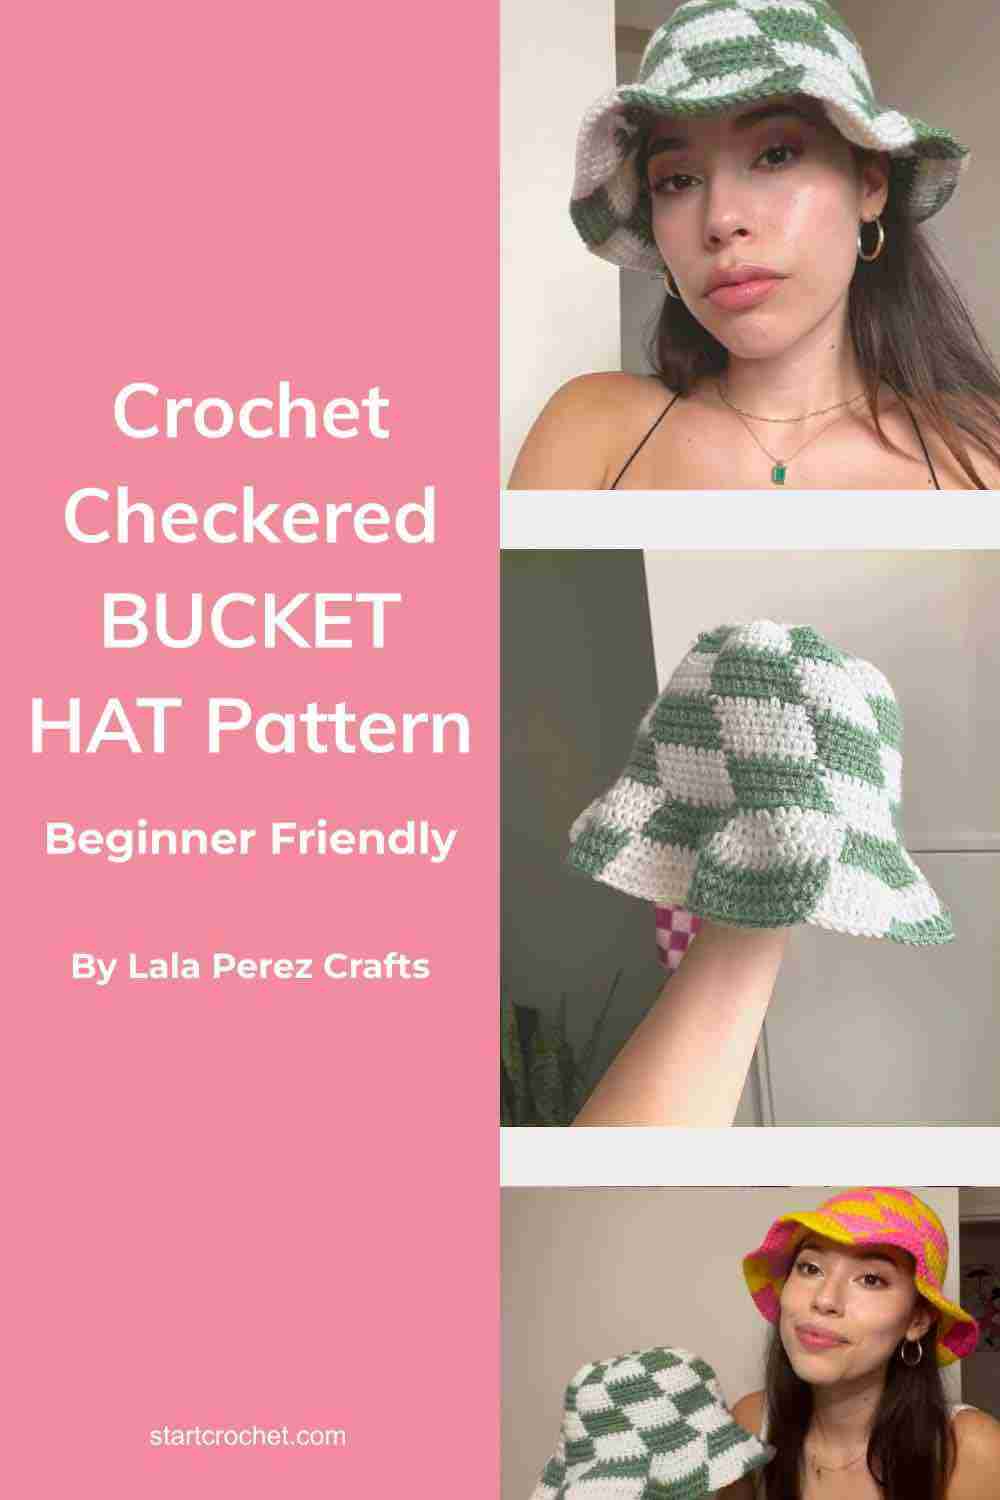 Crochet Bucket Hat checkered pattern